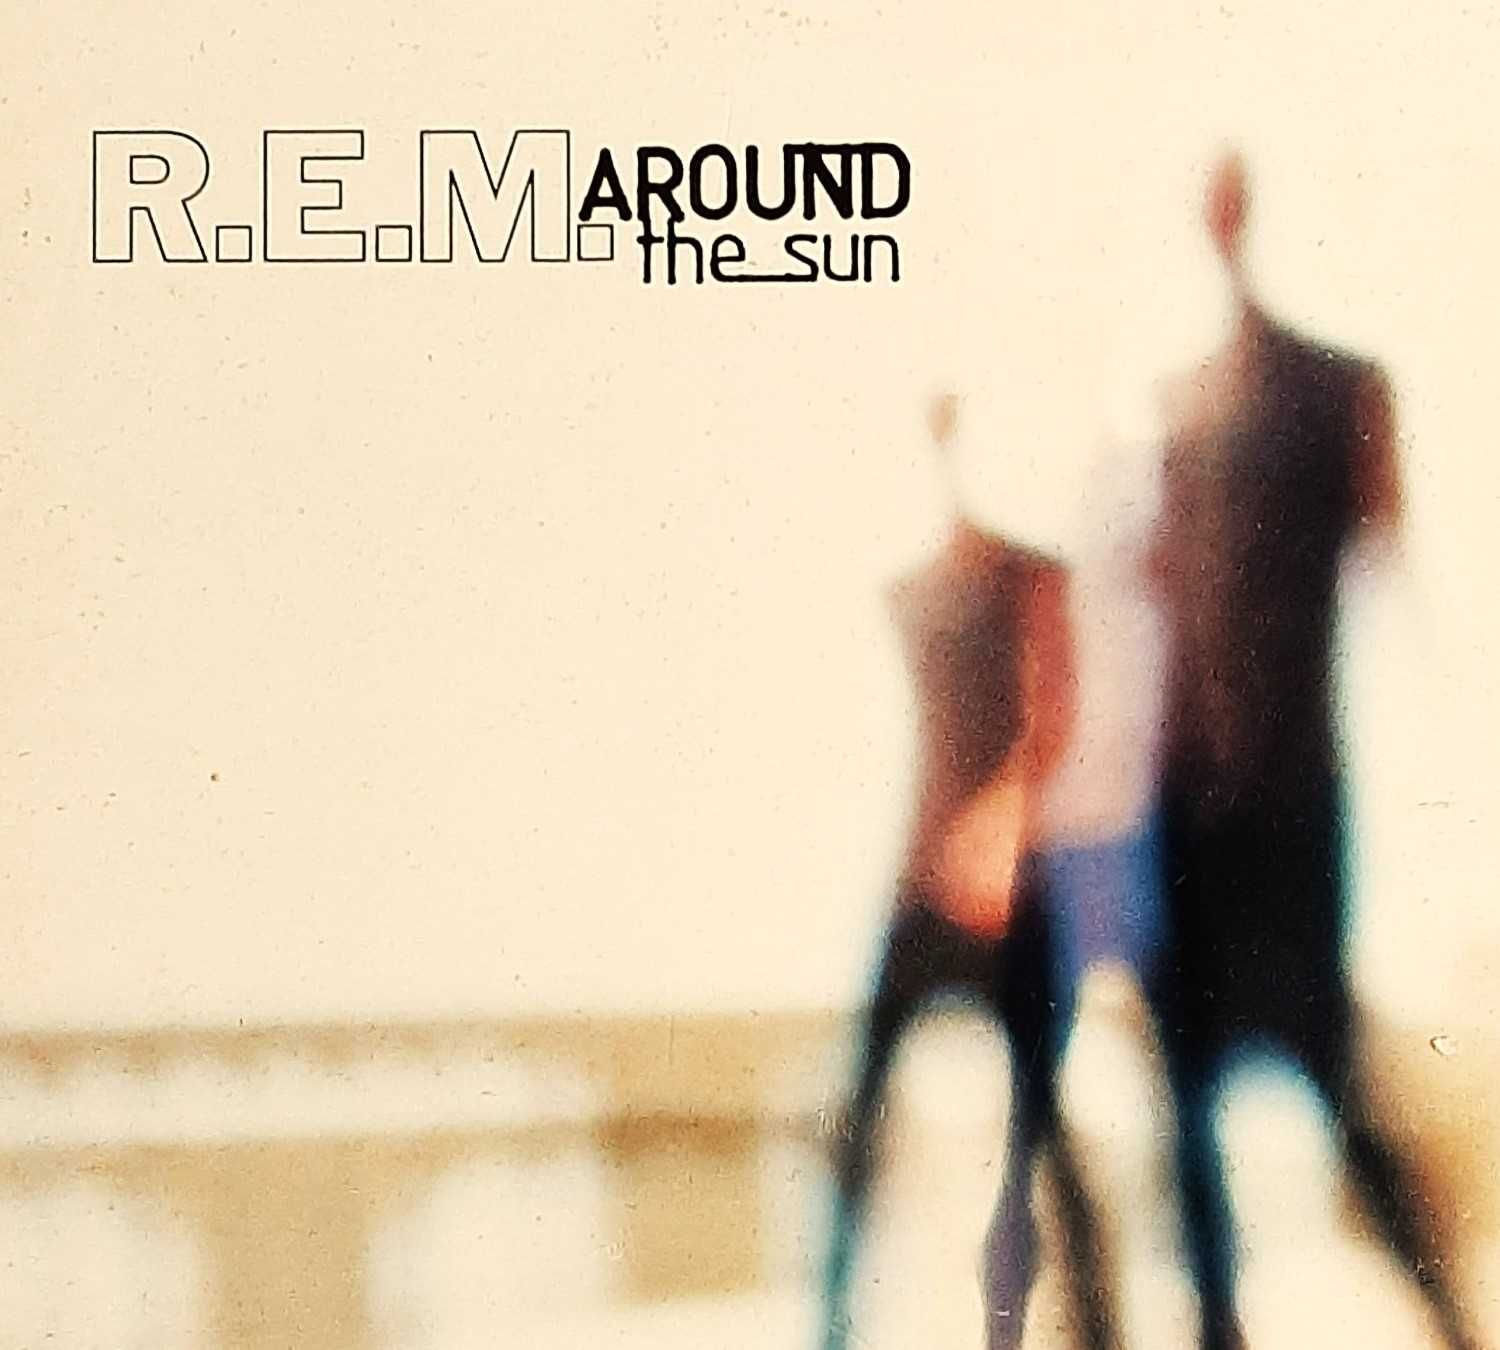 Znakomity Album CD Zespołu  R.E.M- Around The Sun